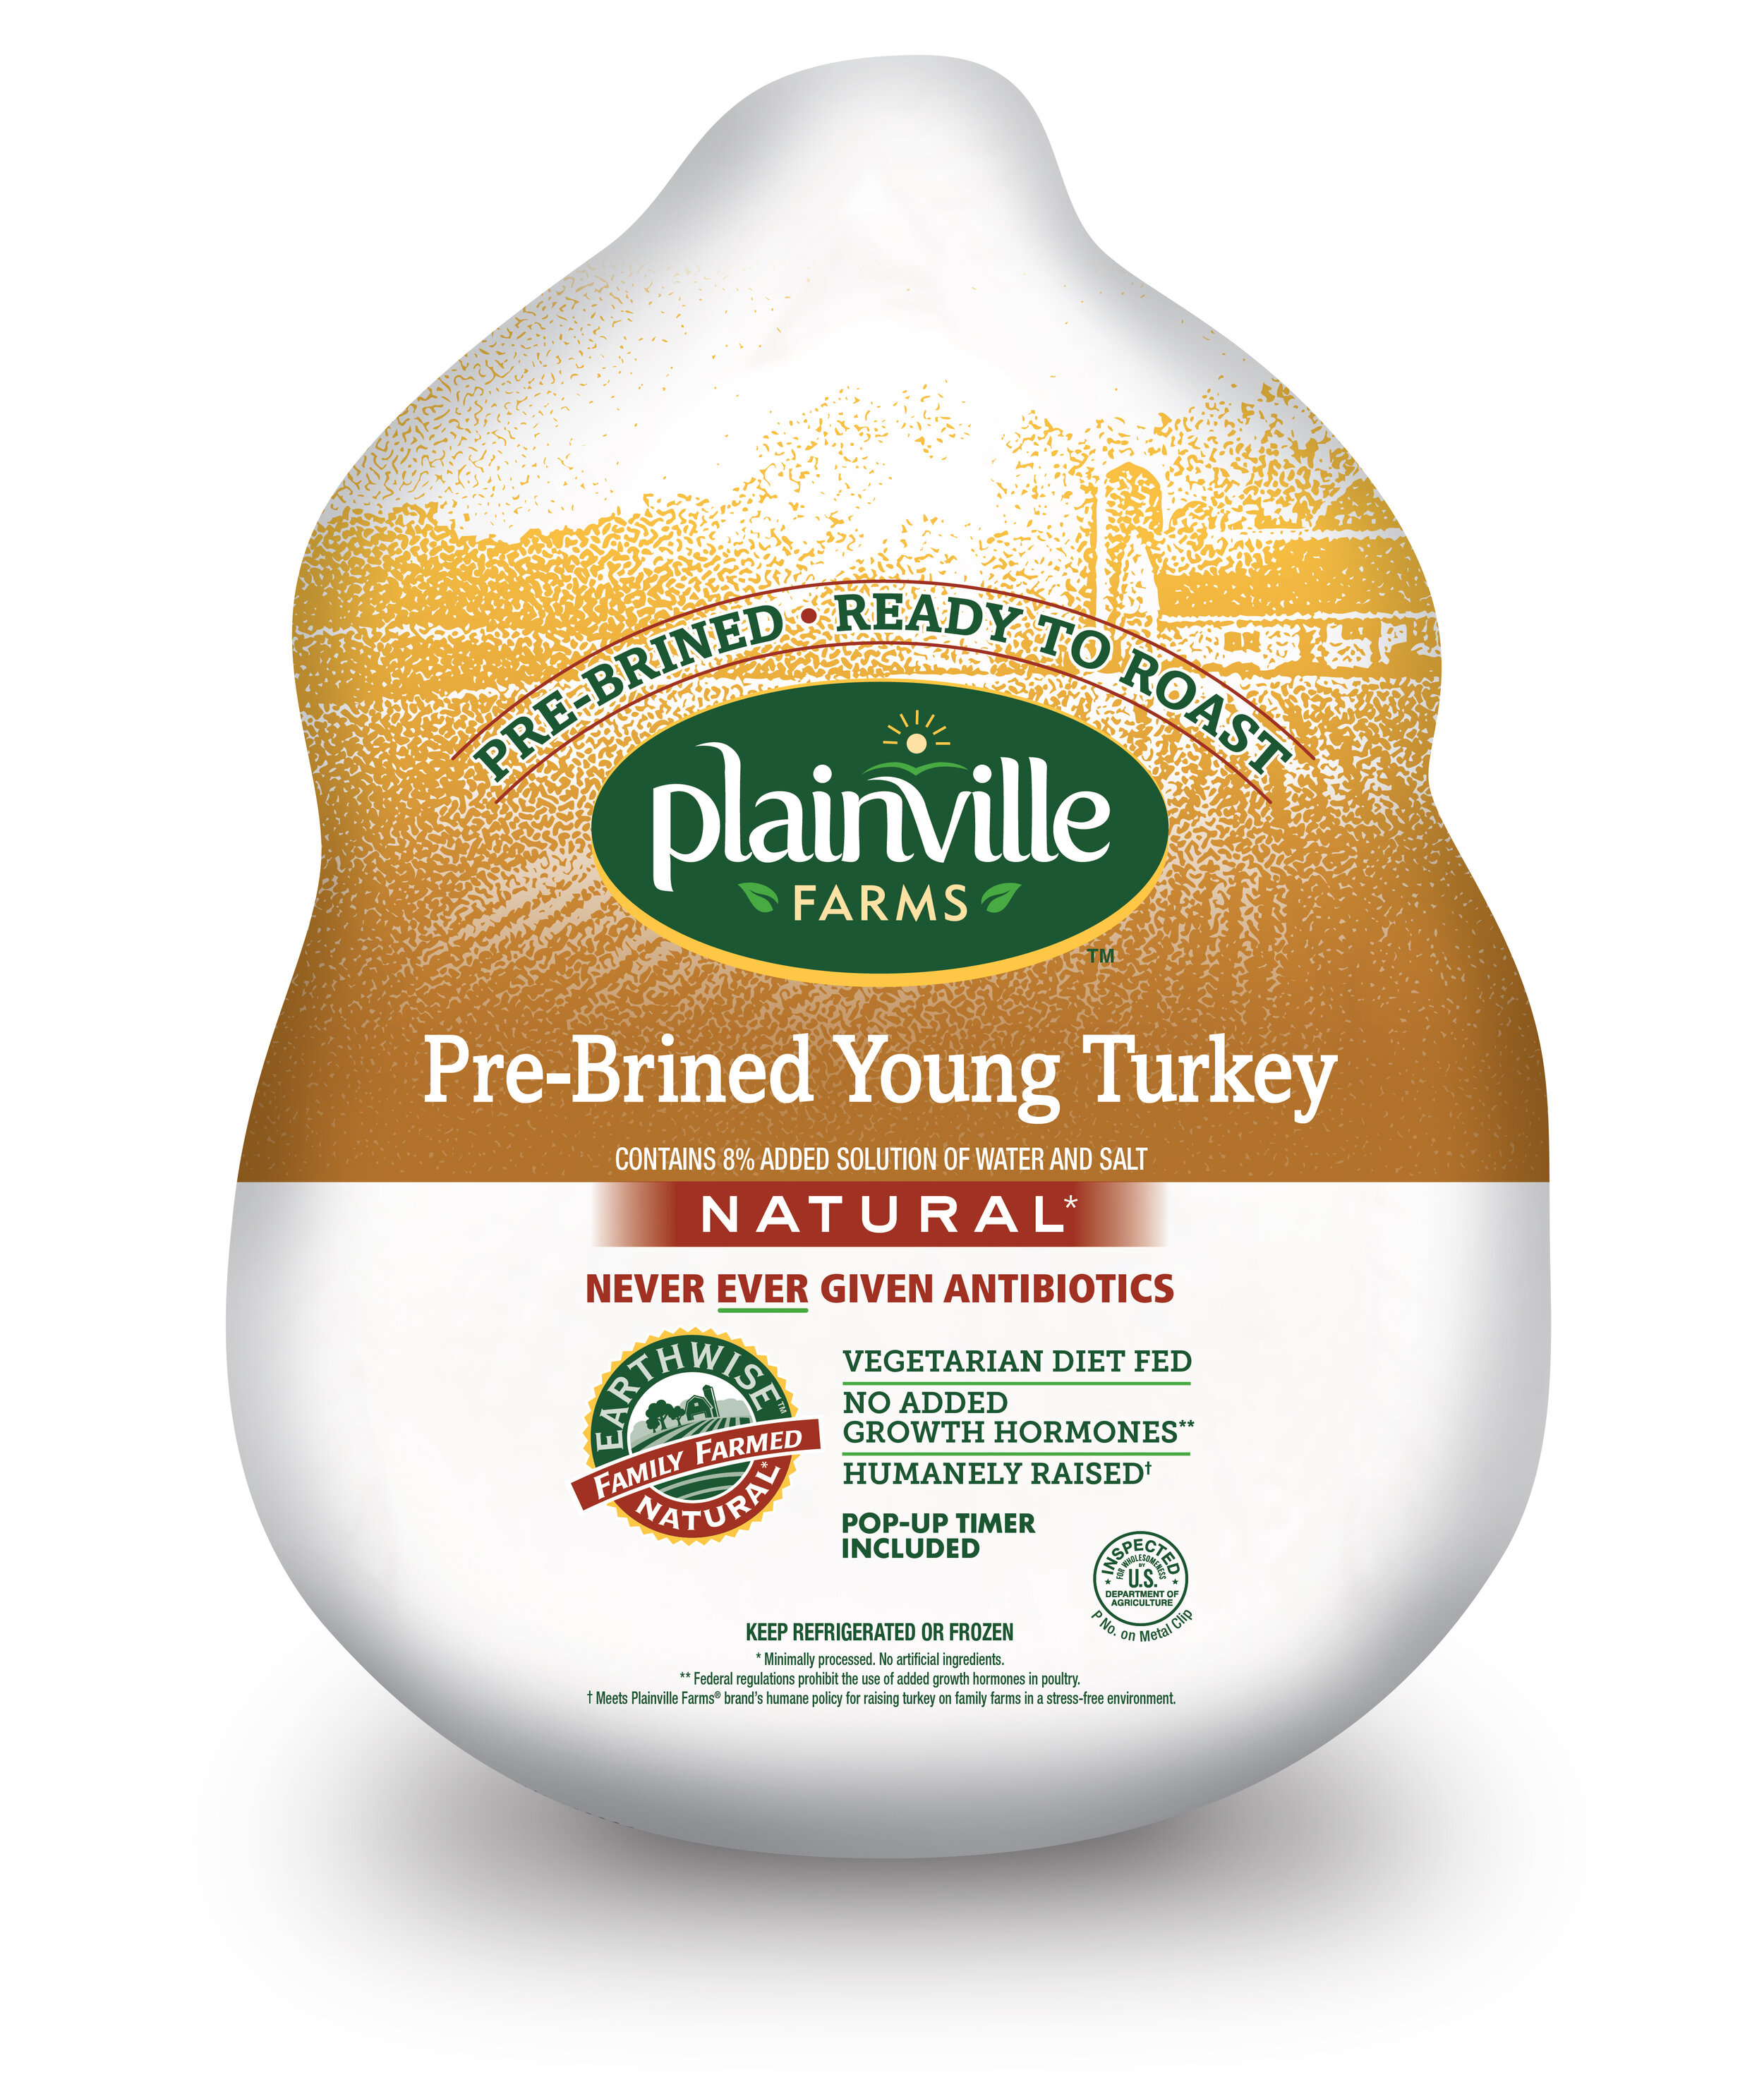 Pre-brined Young Turkey